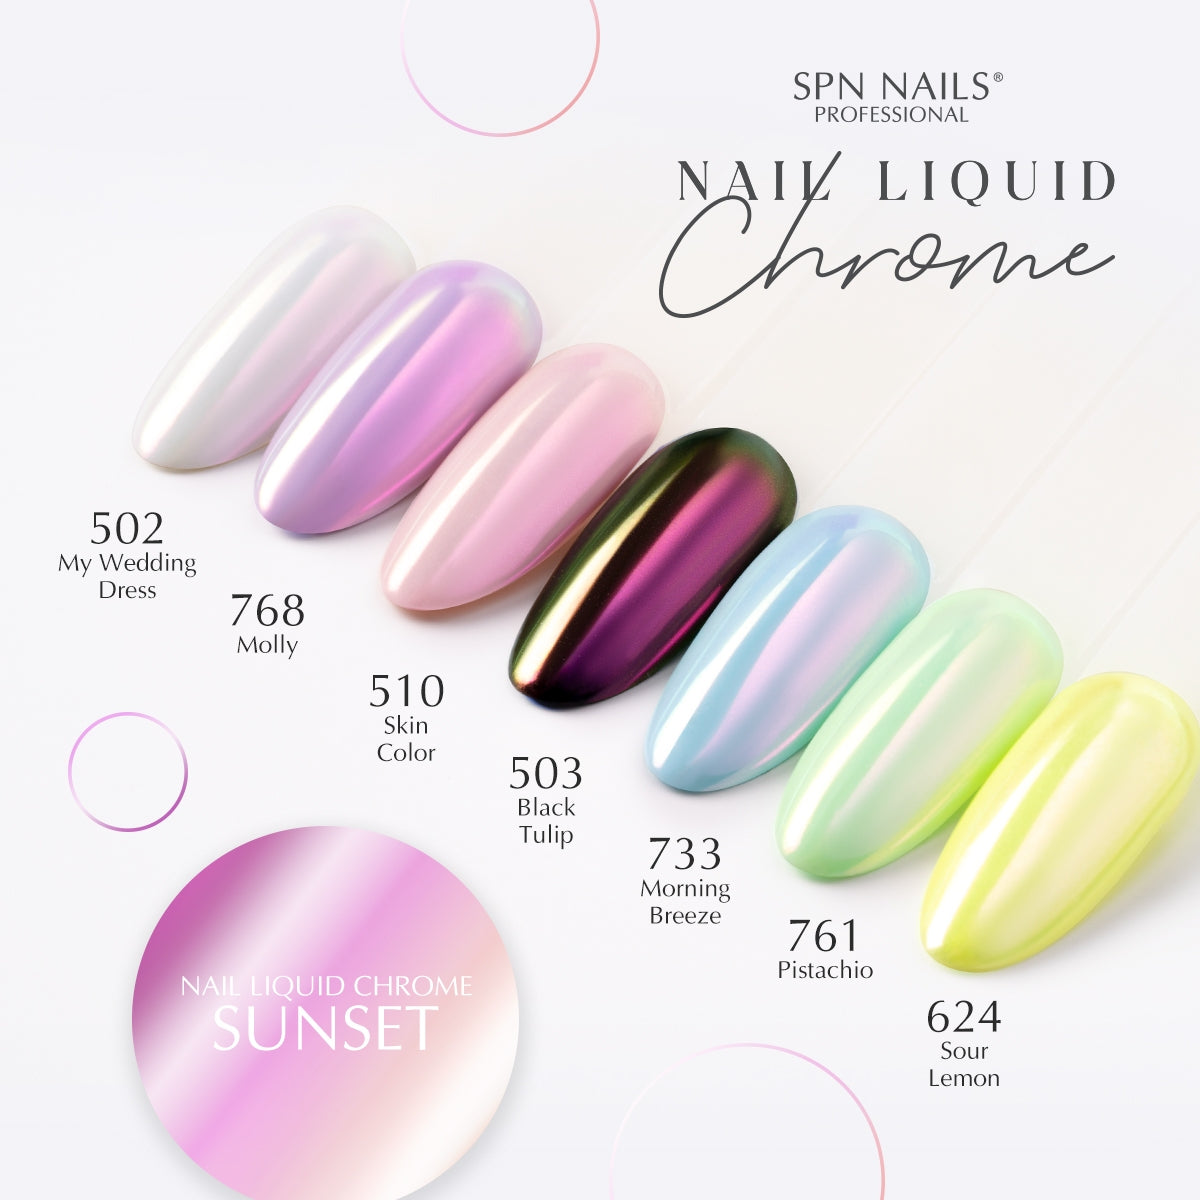 SPN Nails Nail Liquid Chrome Sunset Nail Dust Series